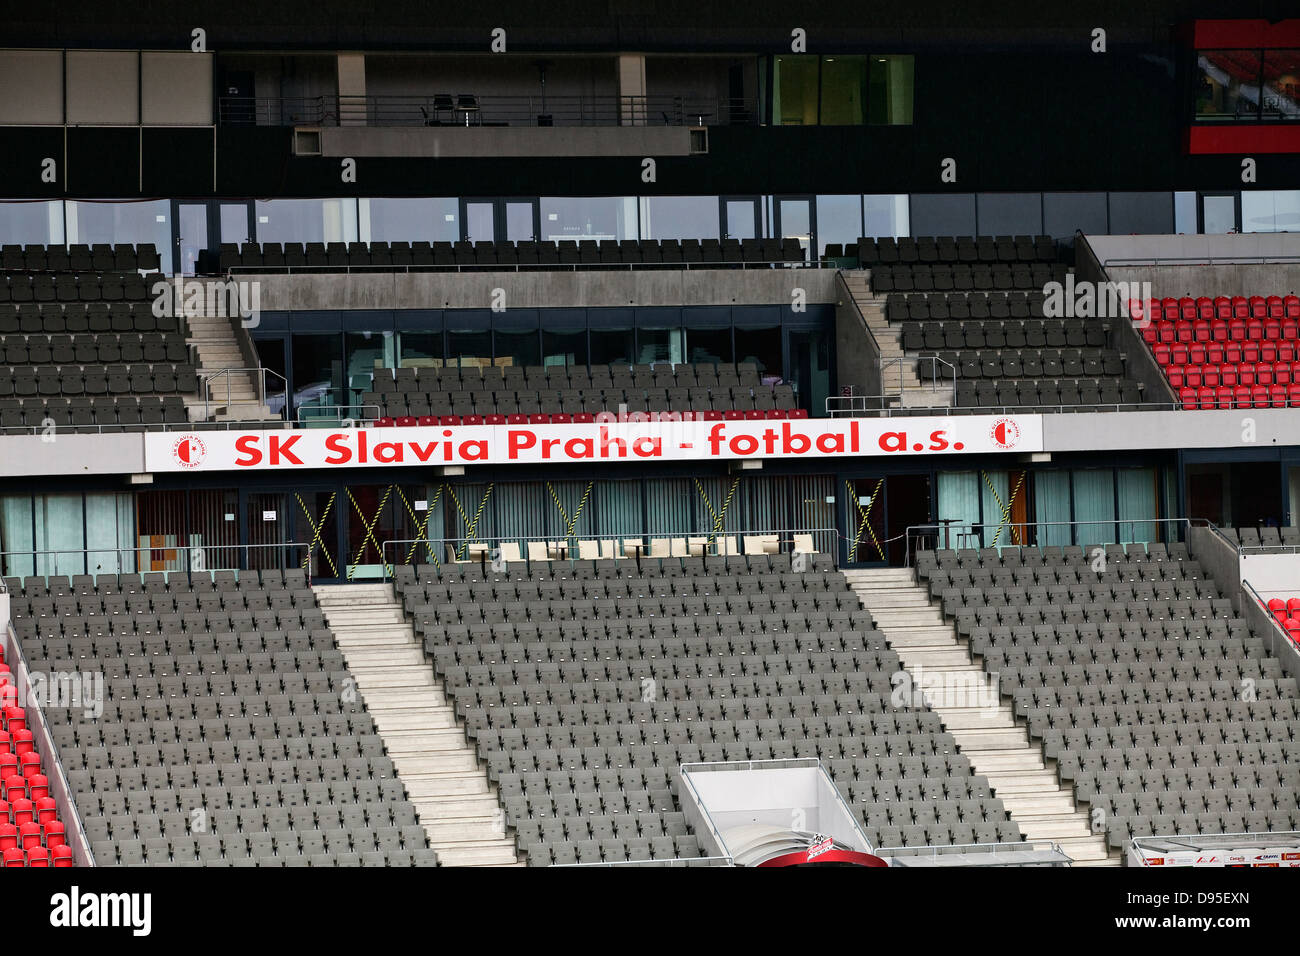 Stadium Eden, Synot Tip Arena, SK Slavia Prague Stock Photo - Alamy